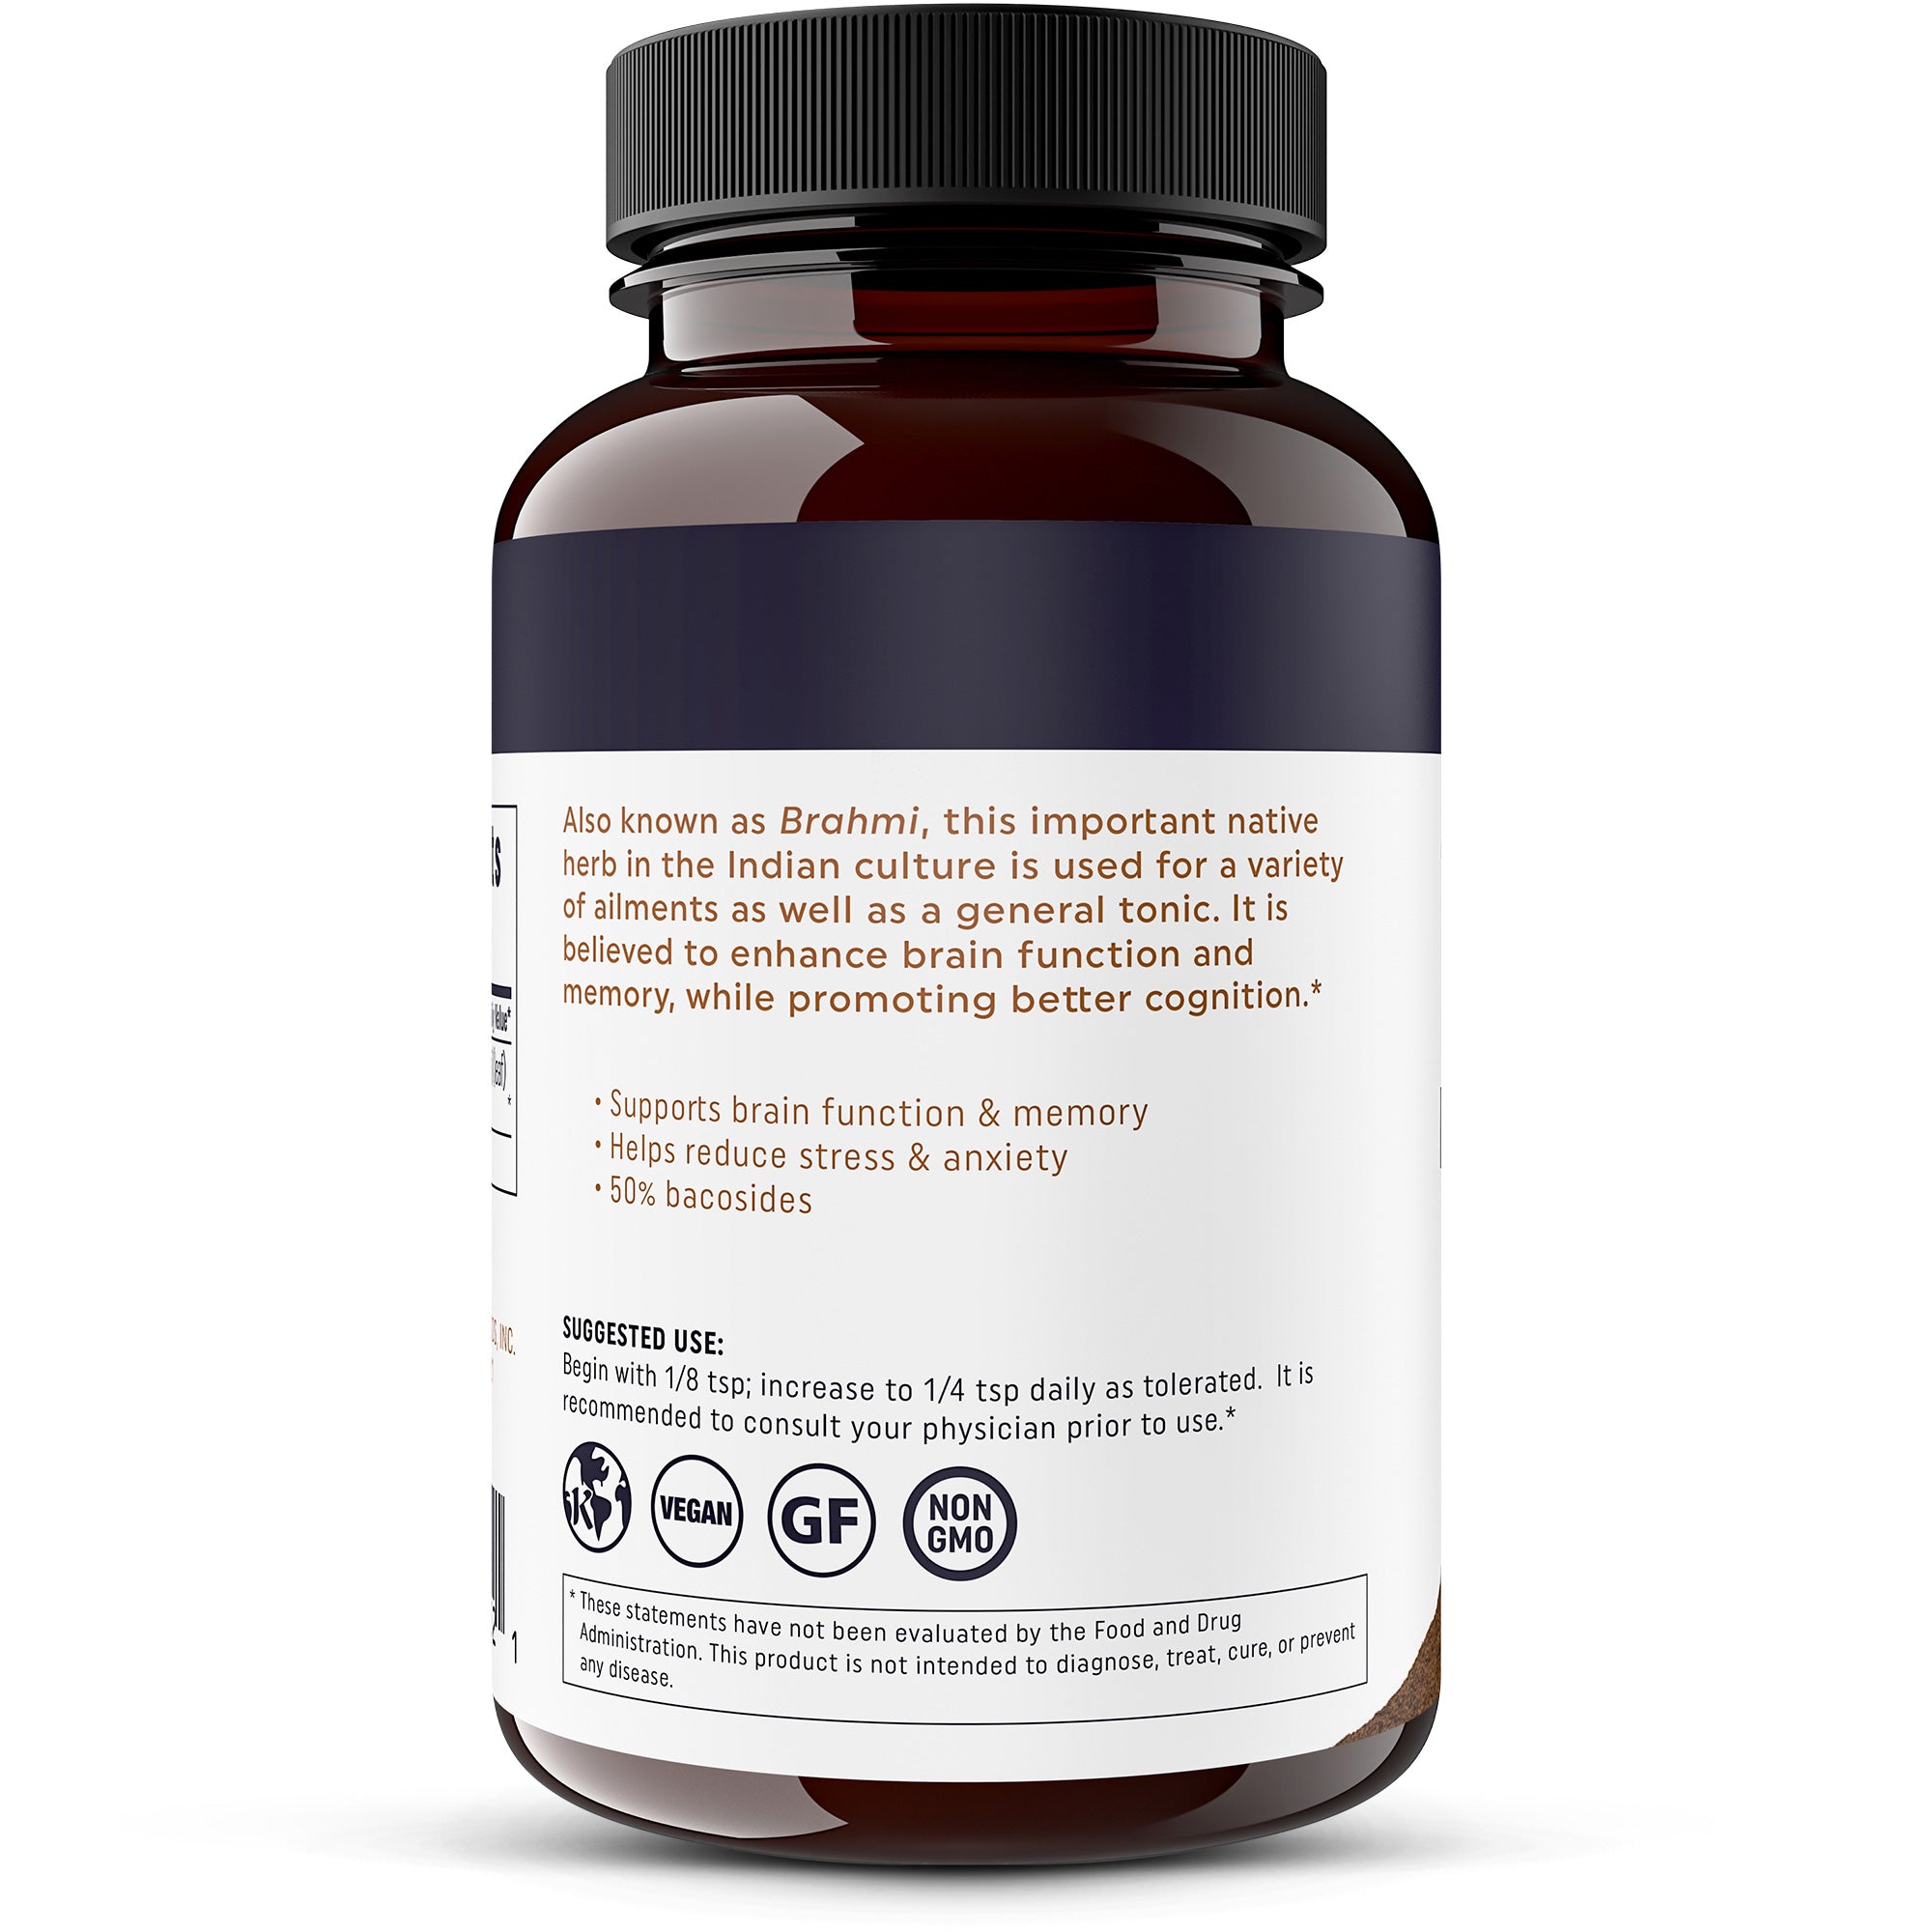 Earth Circle Organics Bacopa Monnieri Extract Powder - Supports Mental Vigilance and Antioxidant Boost